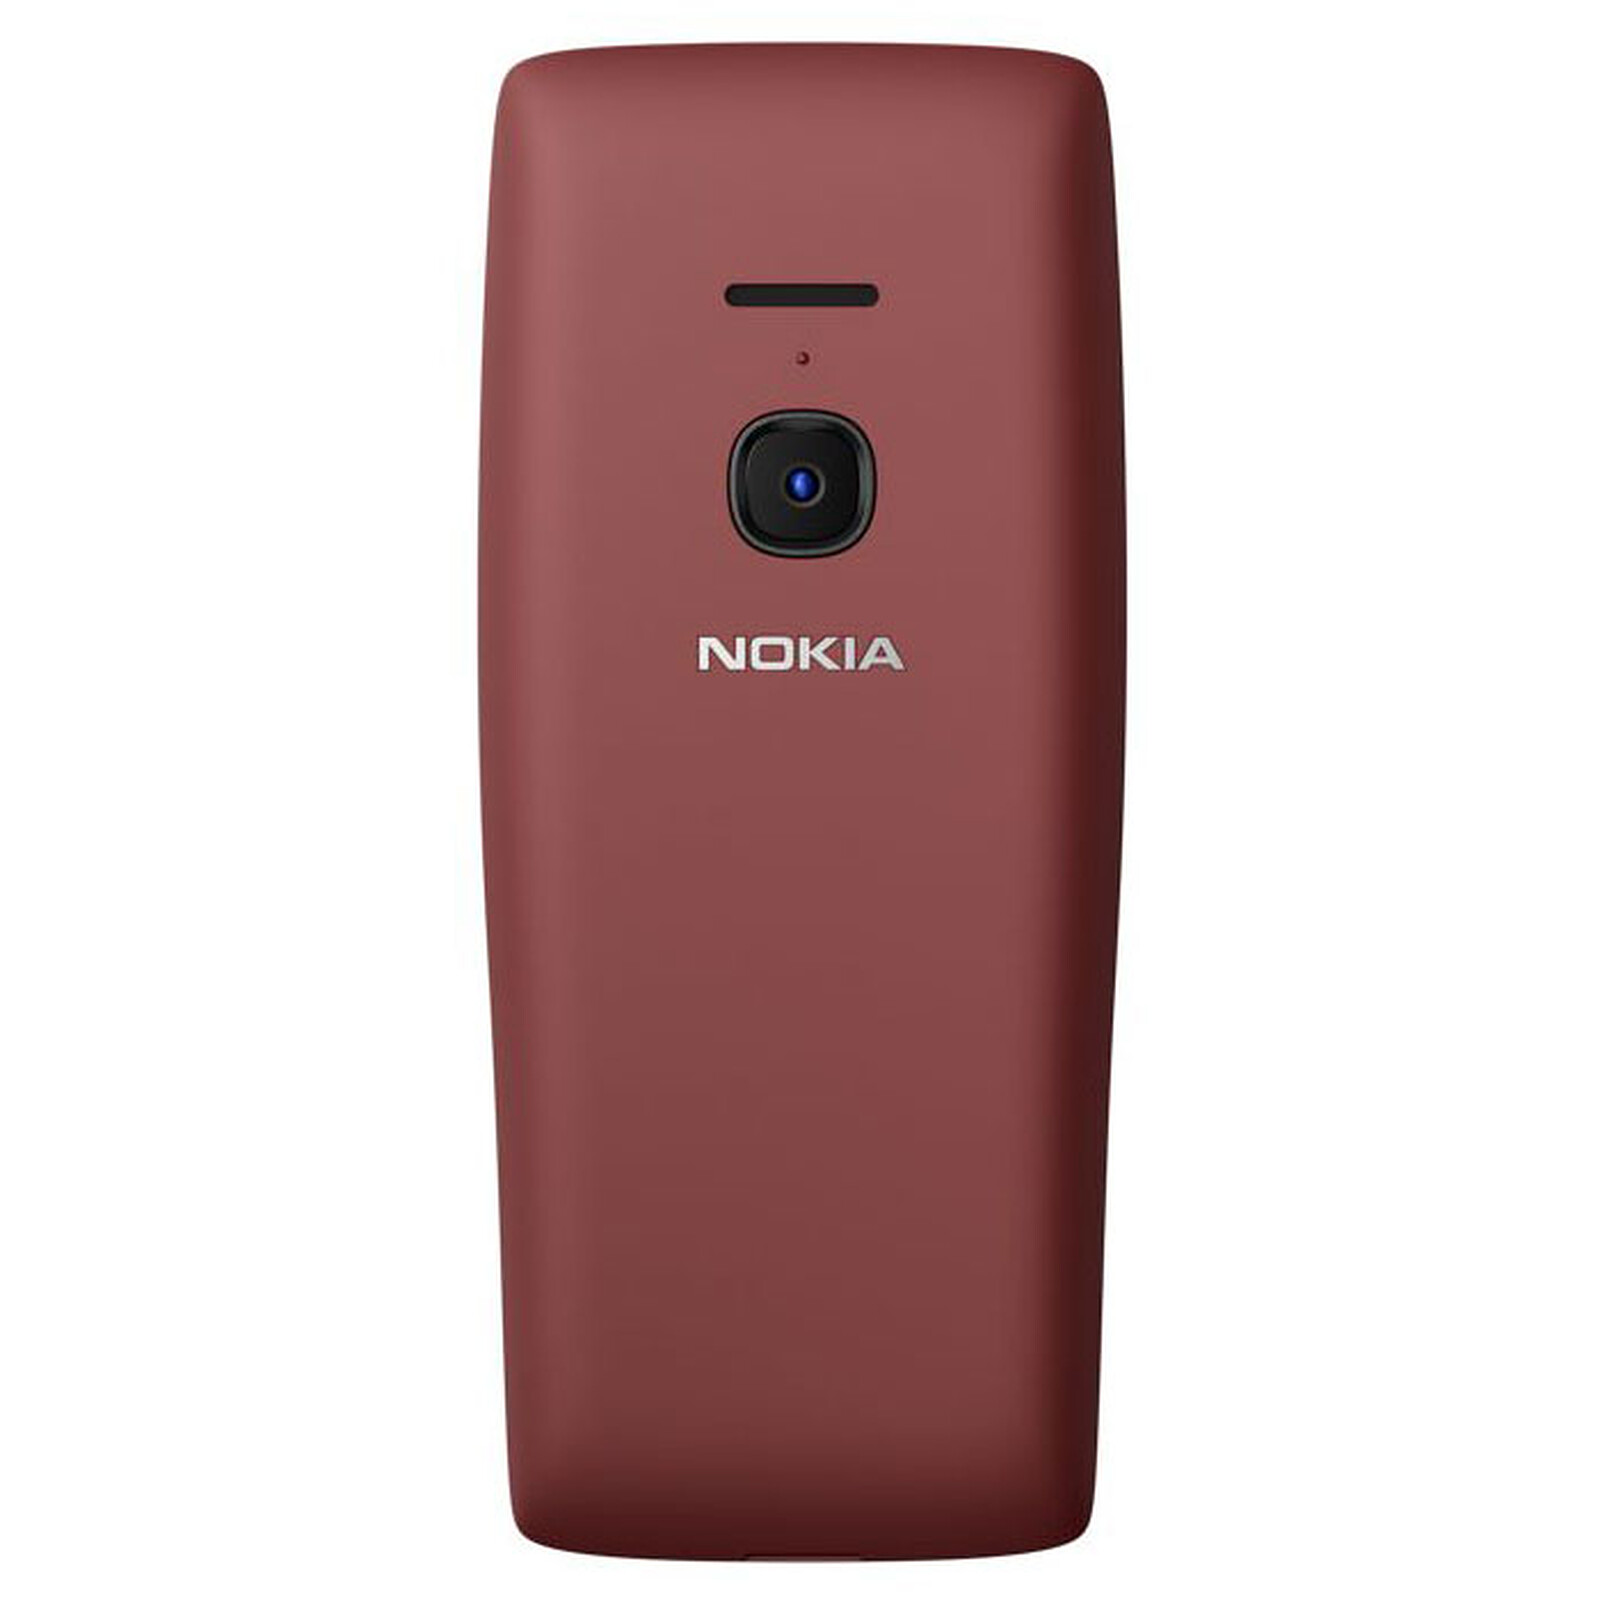 8210 4g. Nokia 8210 4g. Nokia 8210 DS. Нокиа 8210 красный. Нокиа 8210 4g красный.